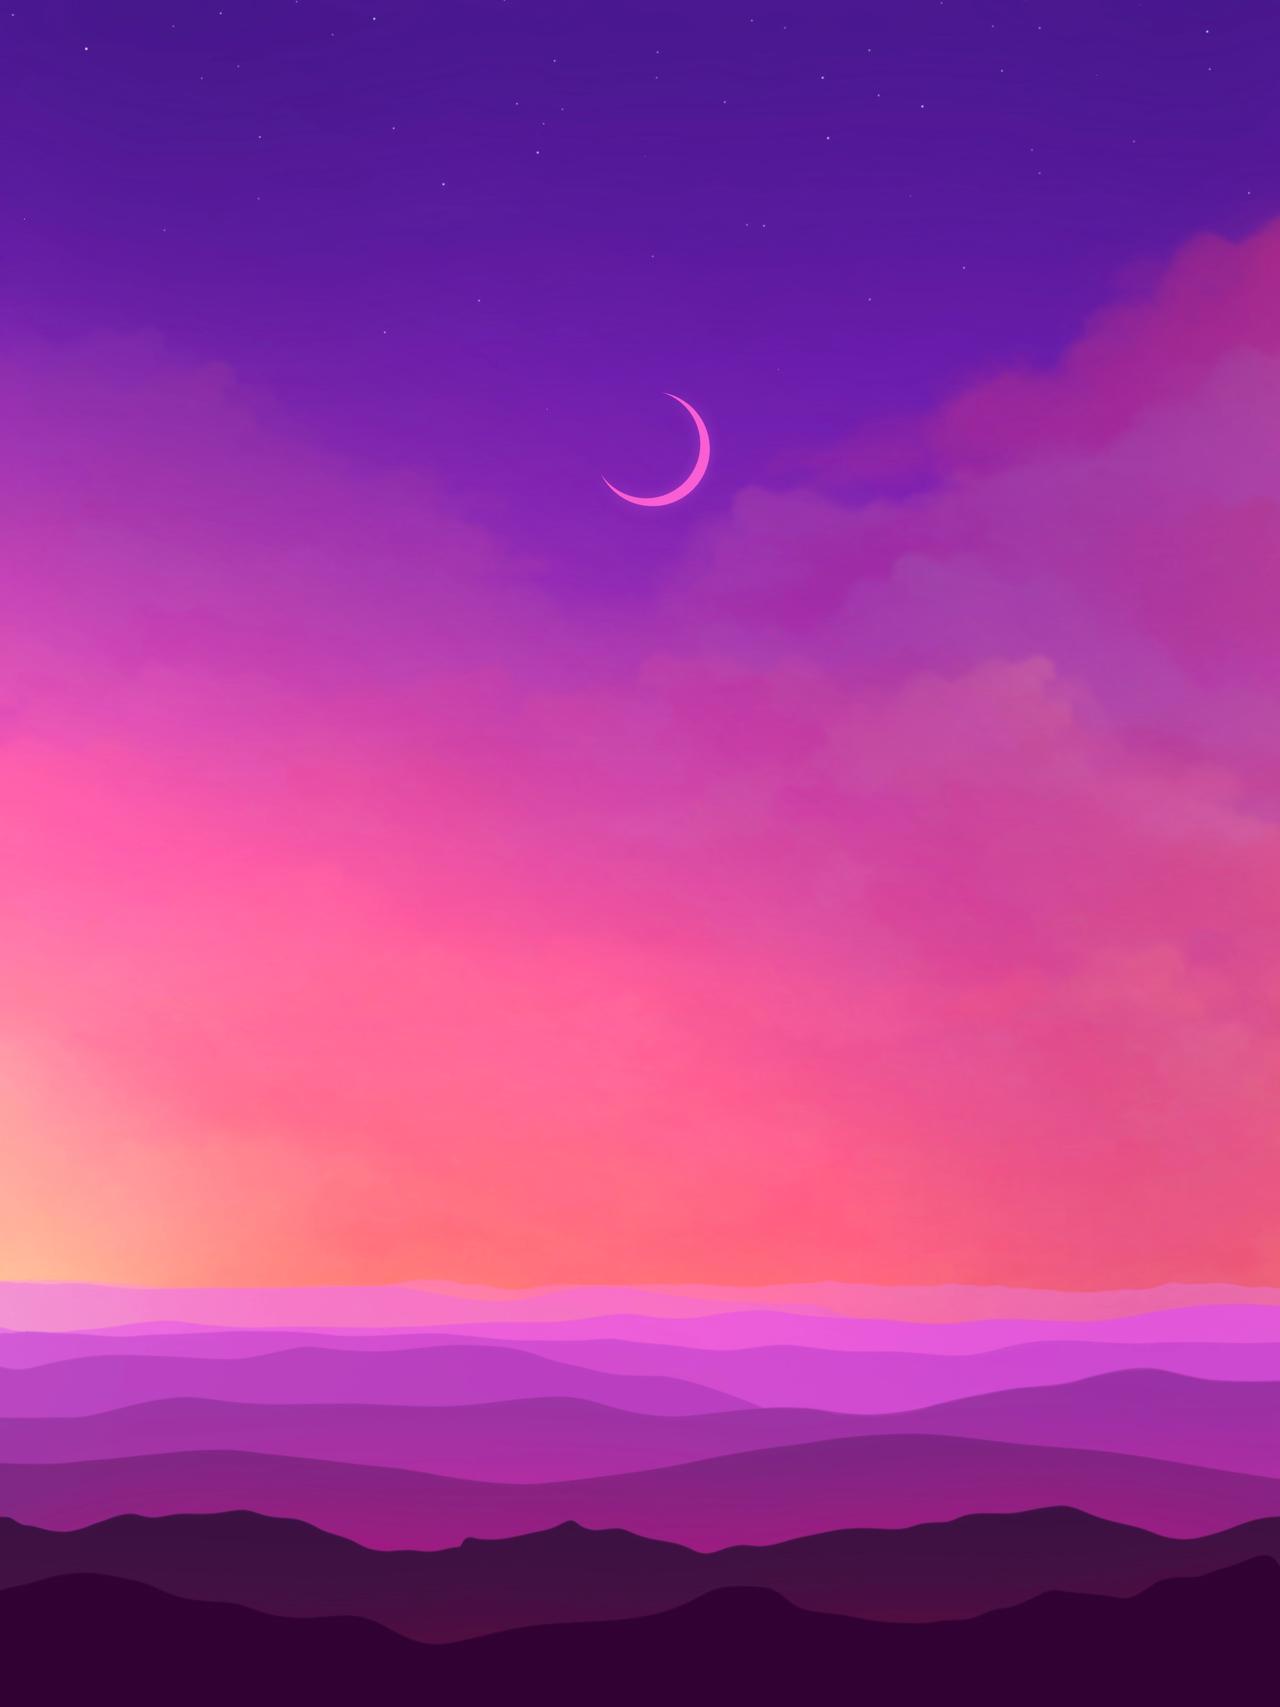 purple, art, moon, violet, hills wallpaper for mobile